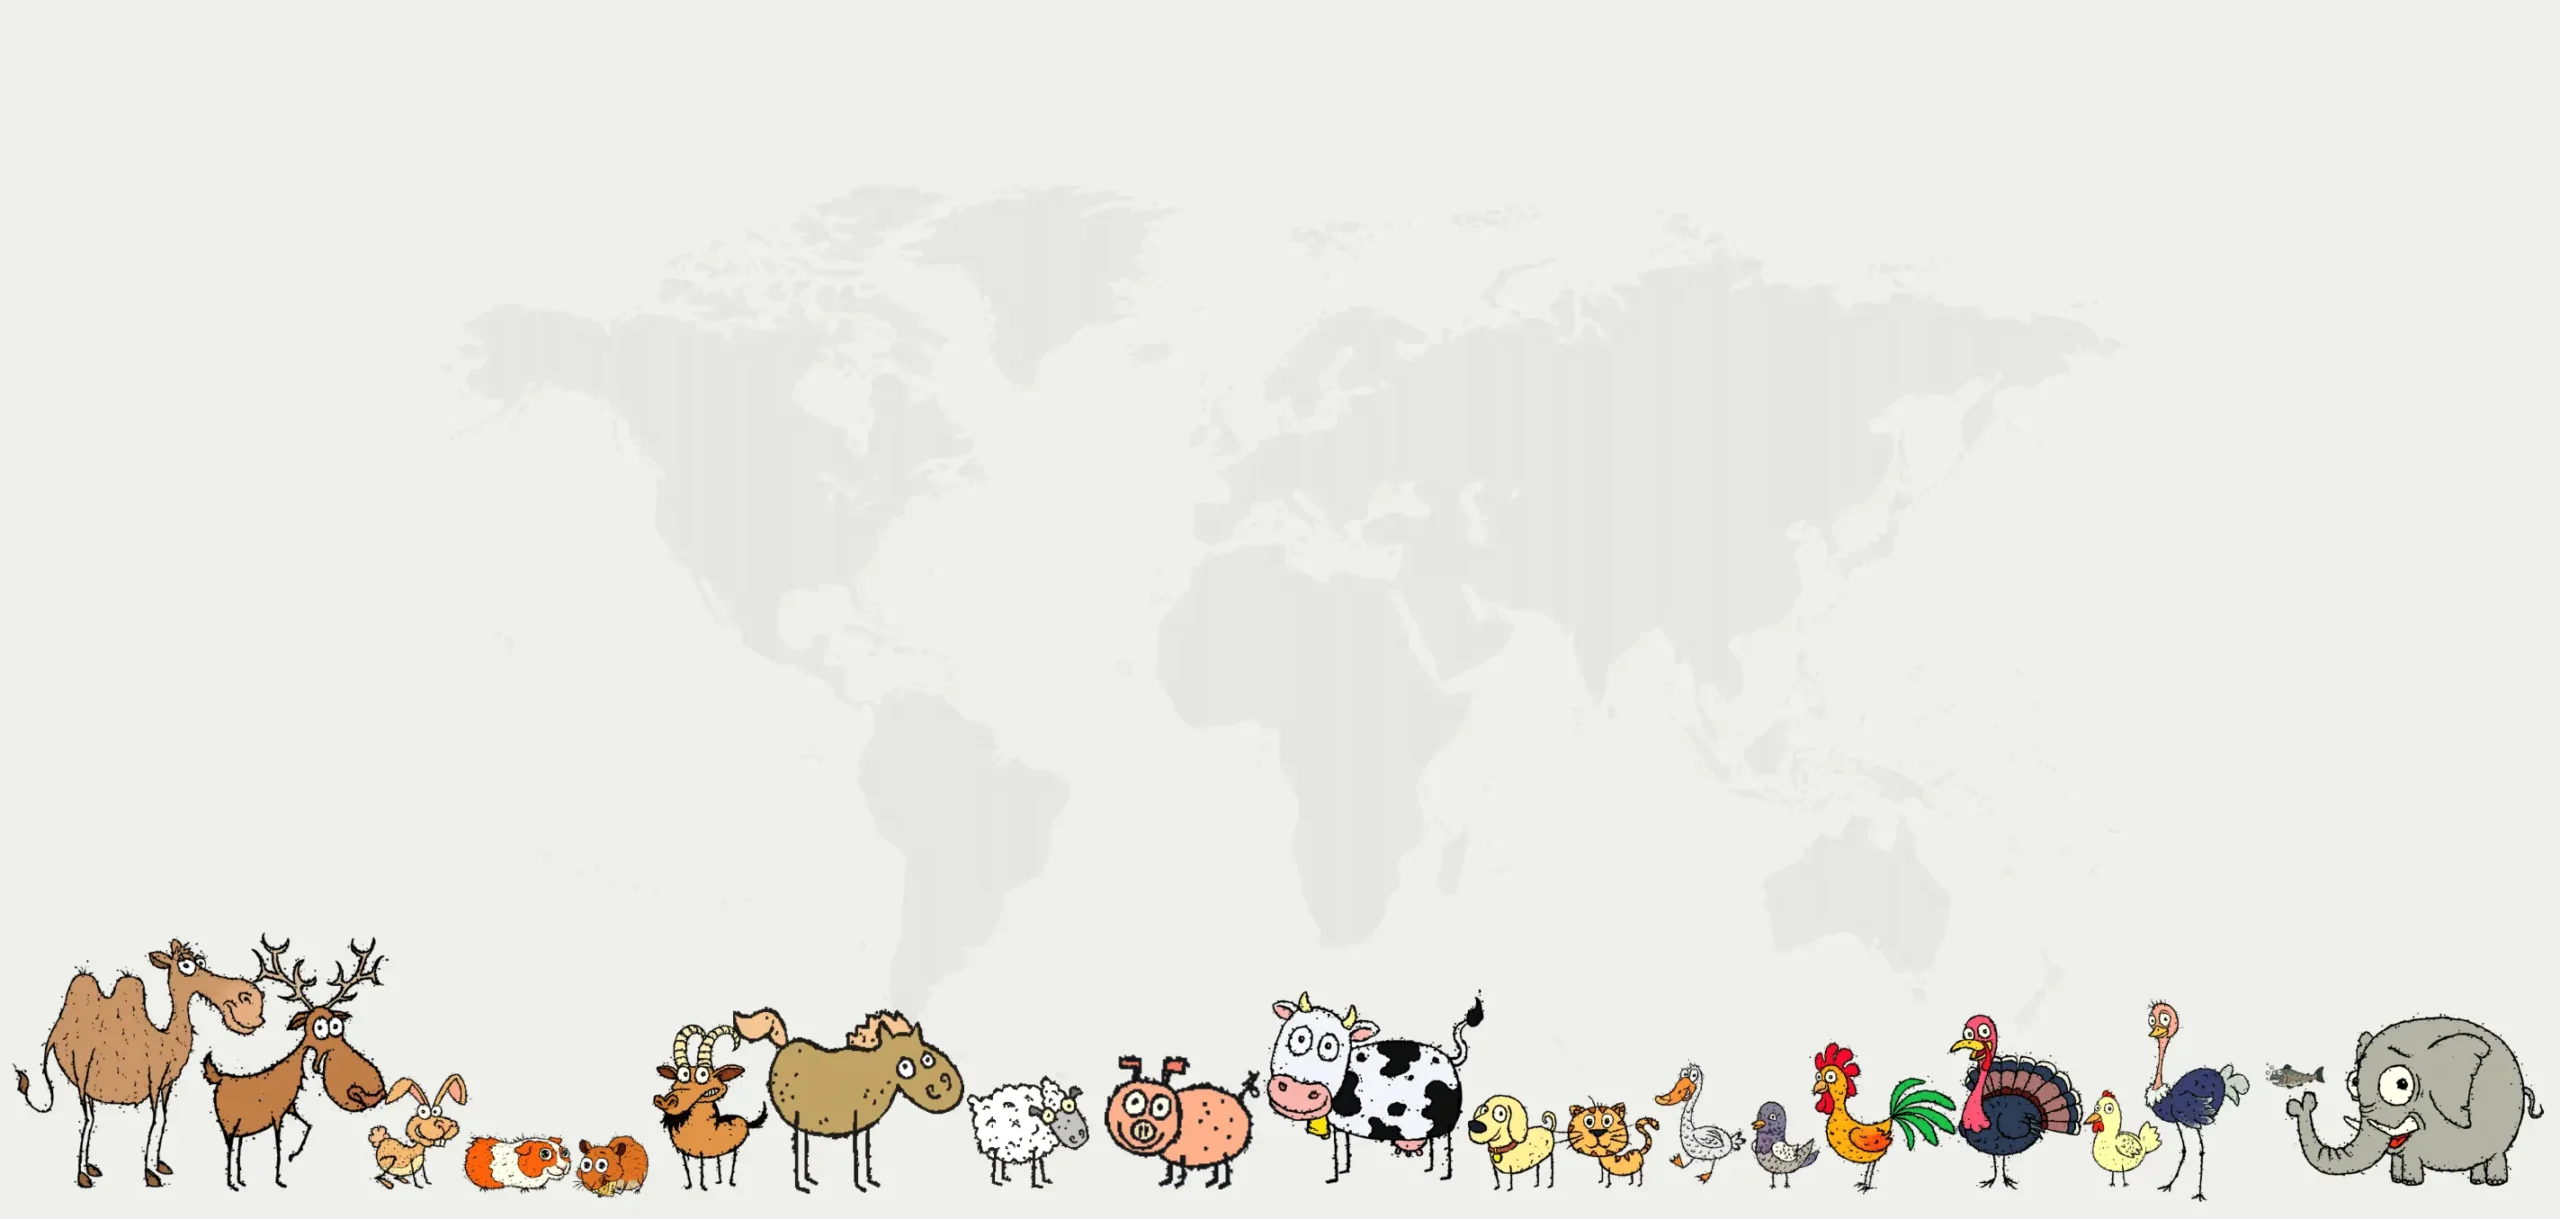 feed formulation software, cartoon animals, world map in background